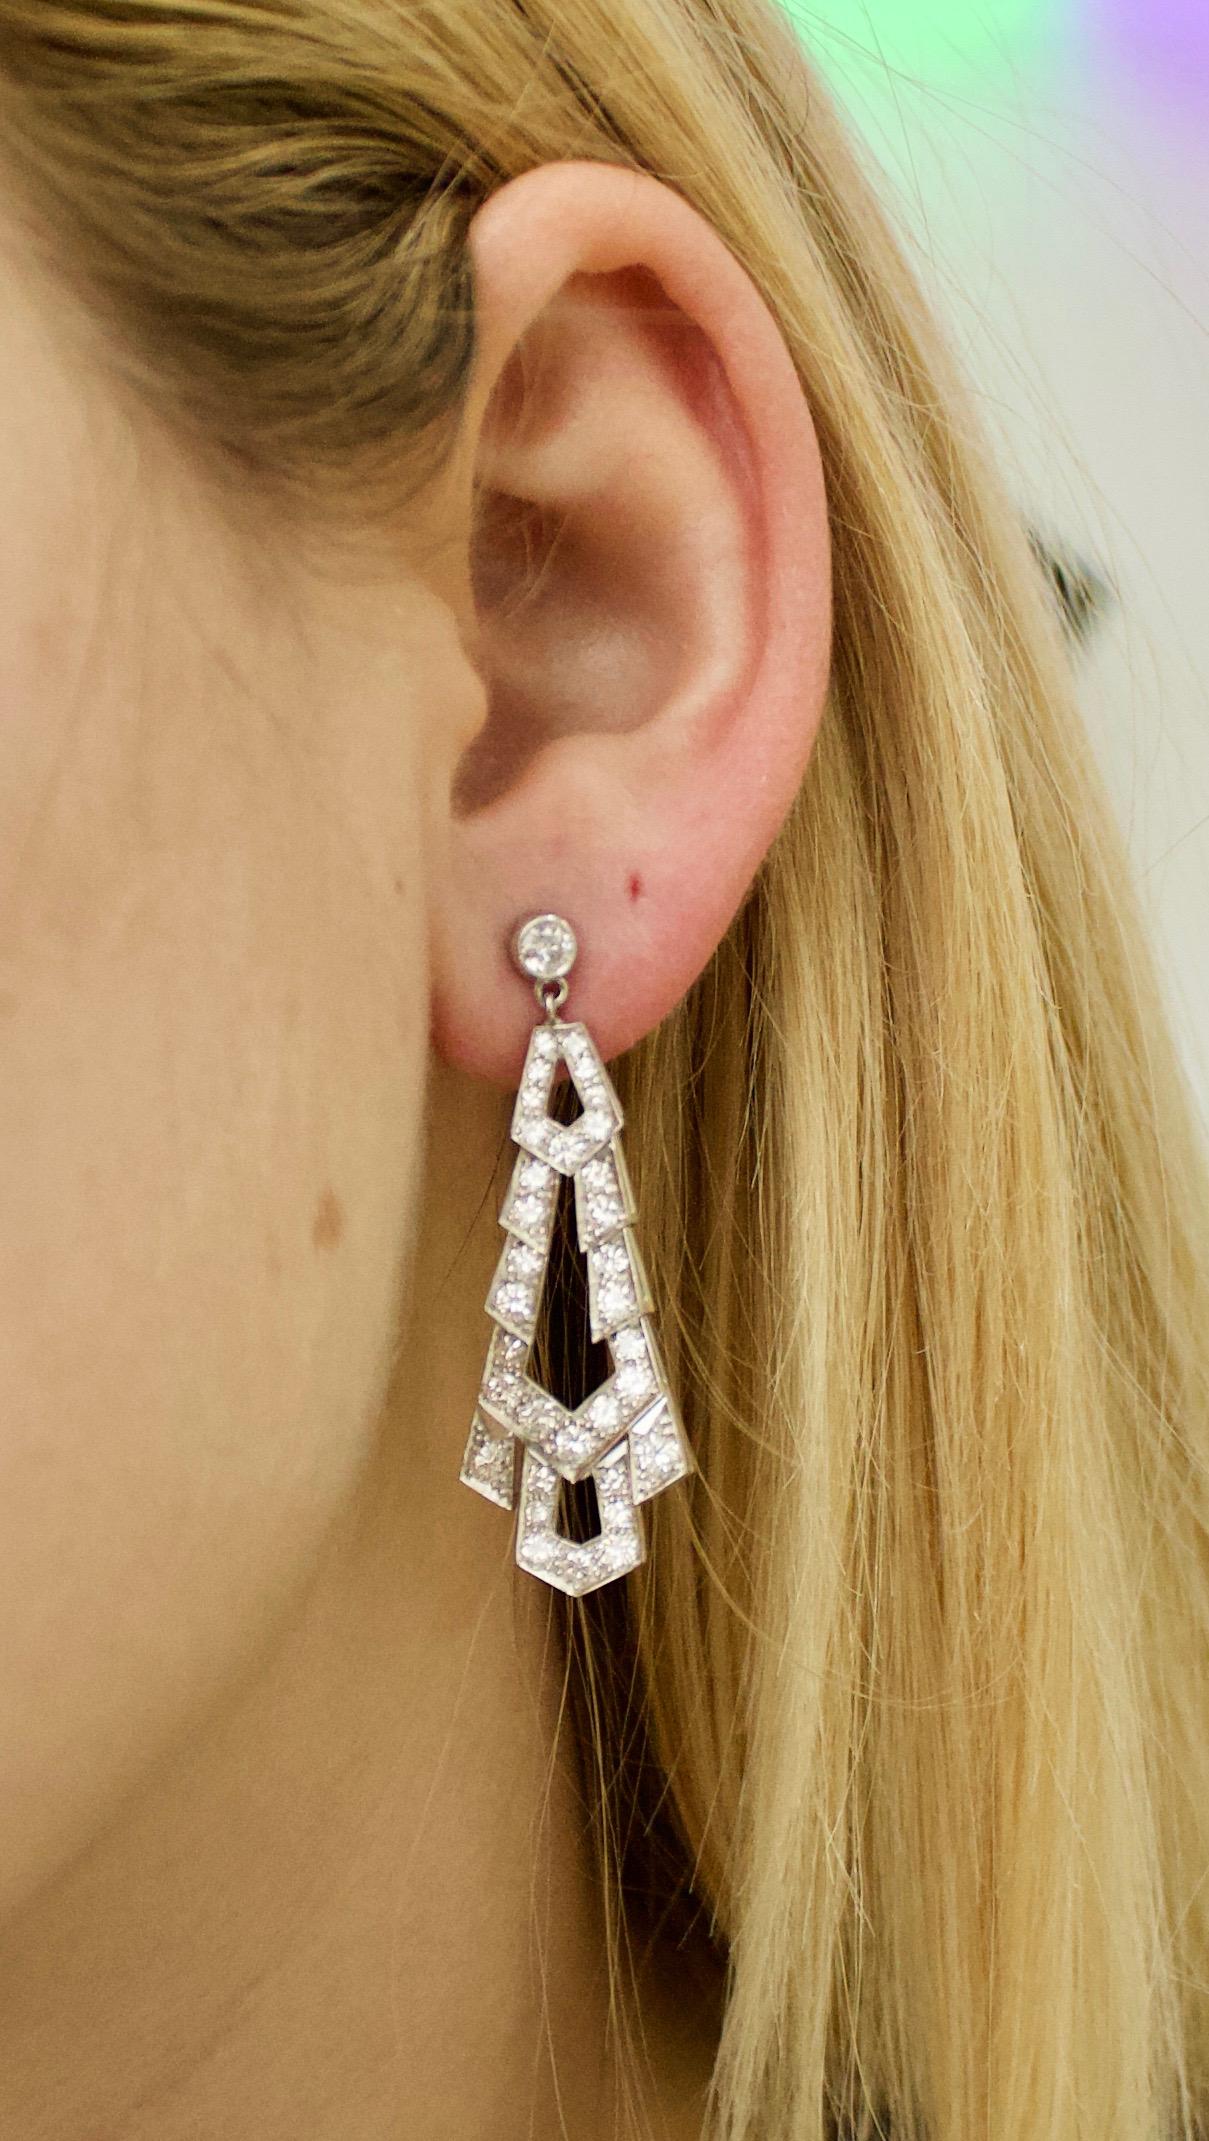 Platinum Diamond Dangling Earrings Circa 1940's
Sixty Six Round Brilliant Cut Diamonds Weighing 3.2 Carats Approximately [GH VVS-VS]